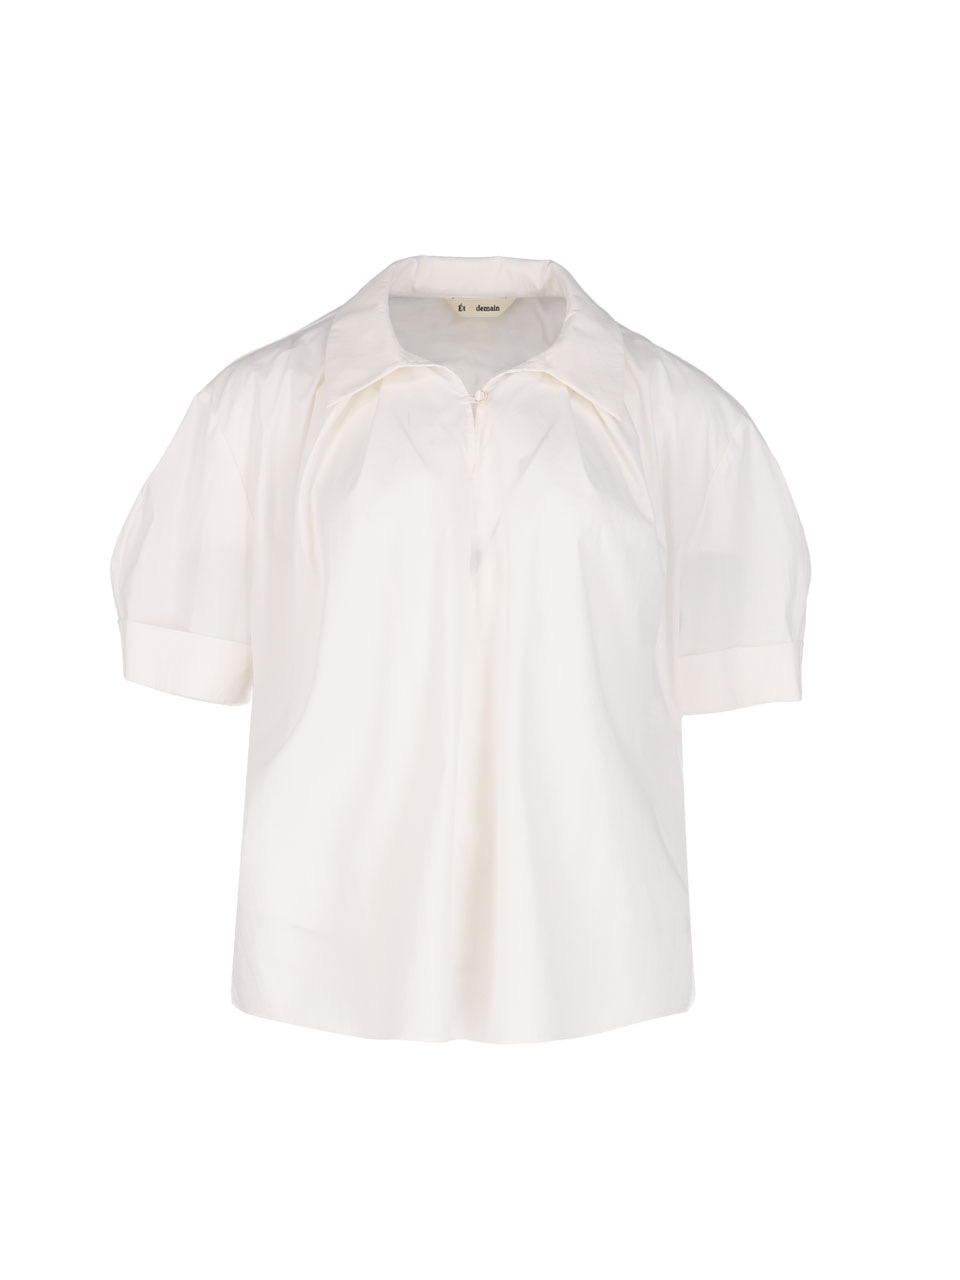 Balloon half sleeve shirt blouse - White